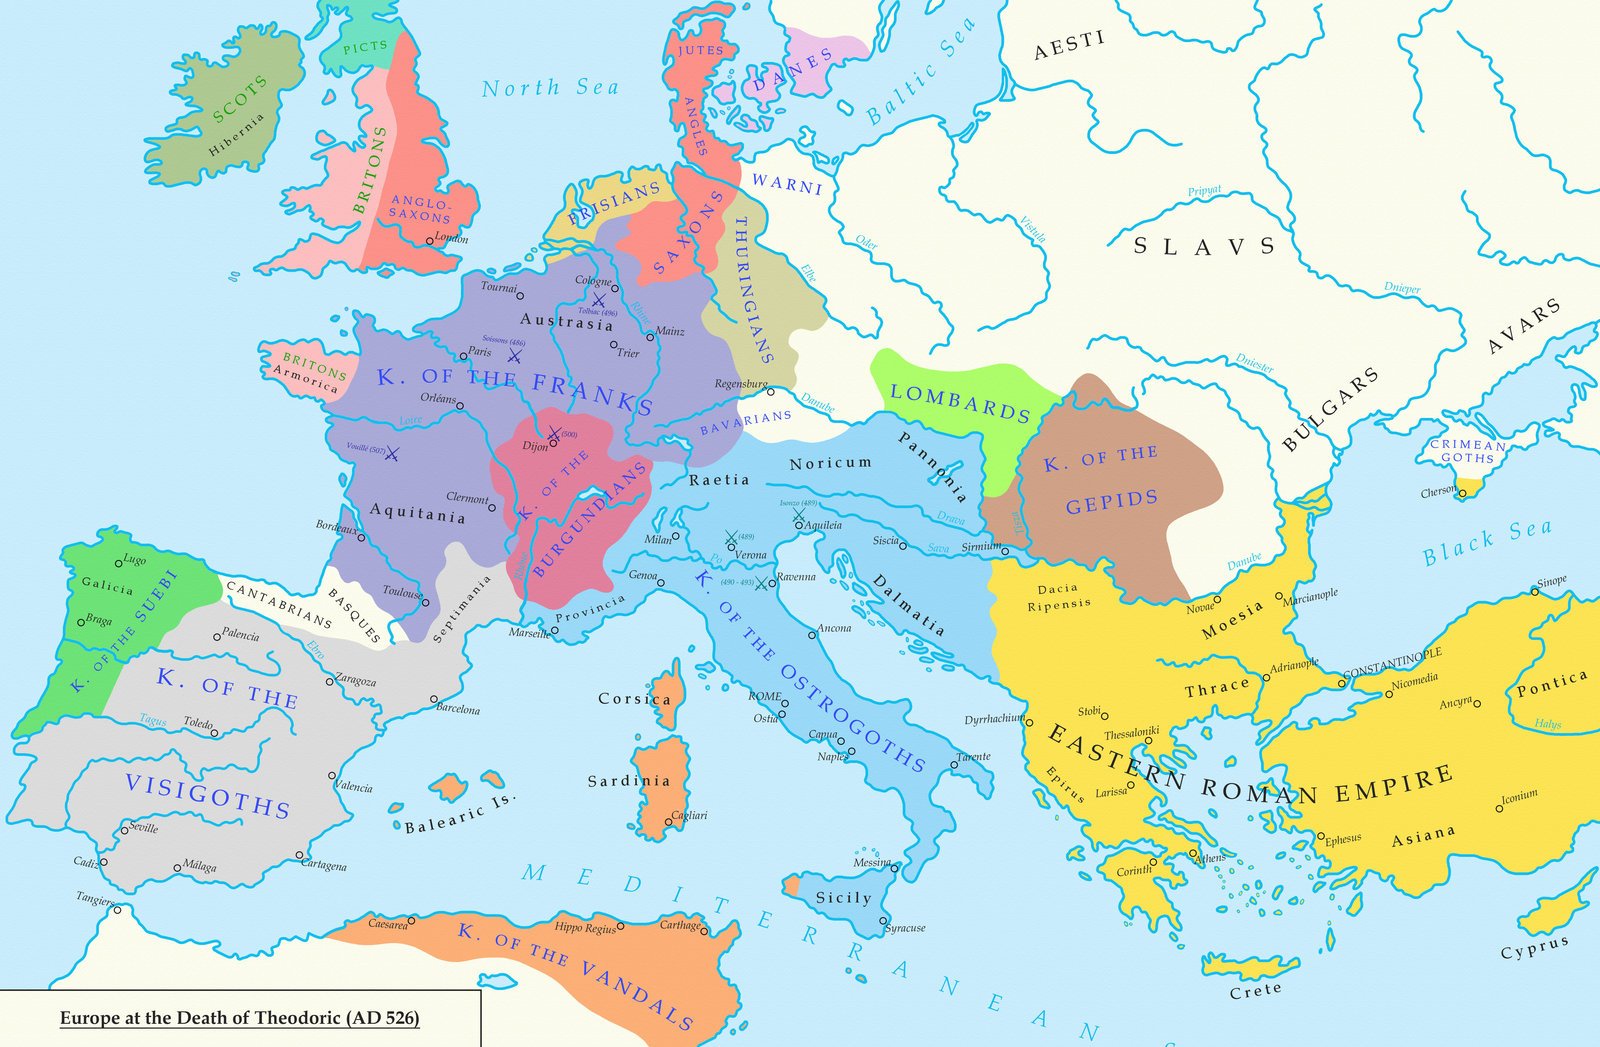 Европа конца 5 - начала 6 века